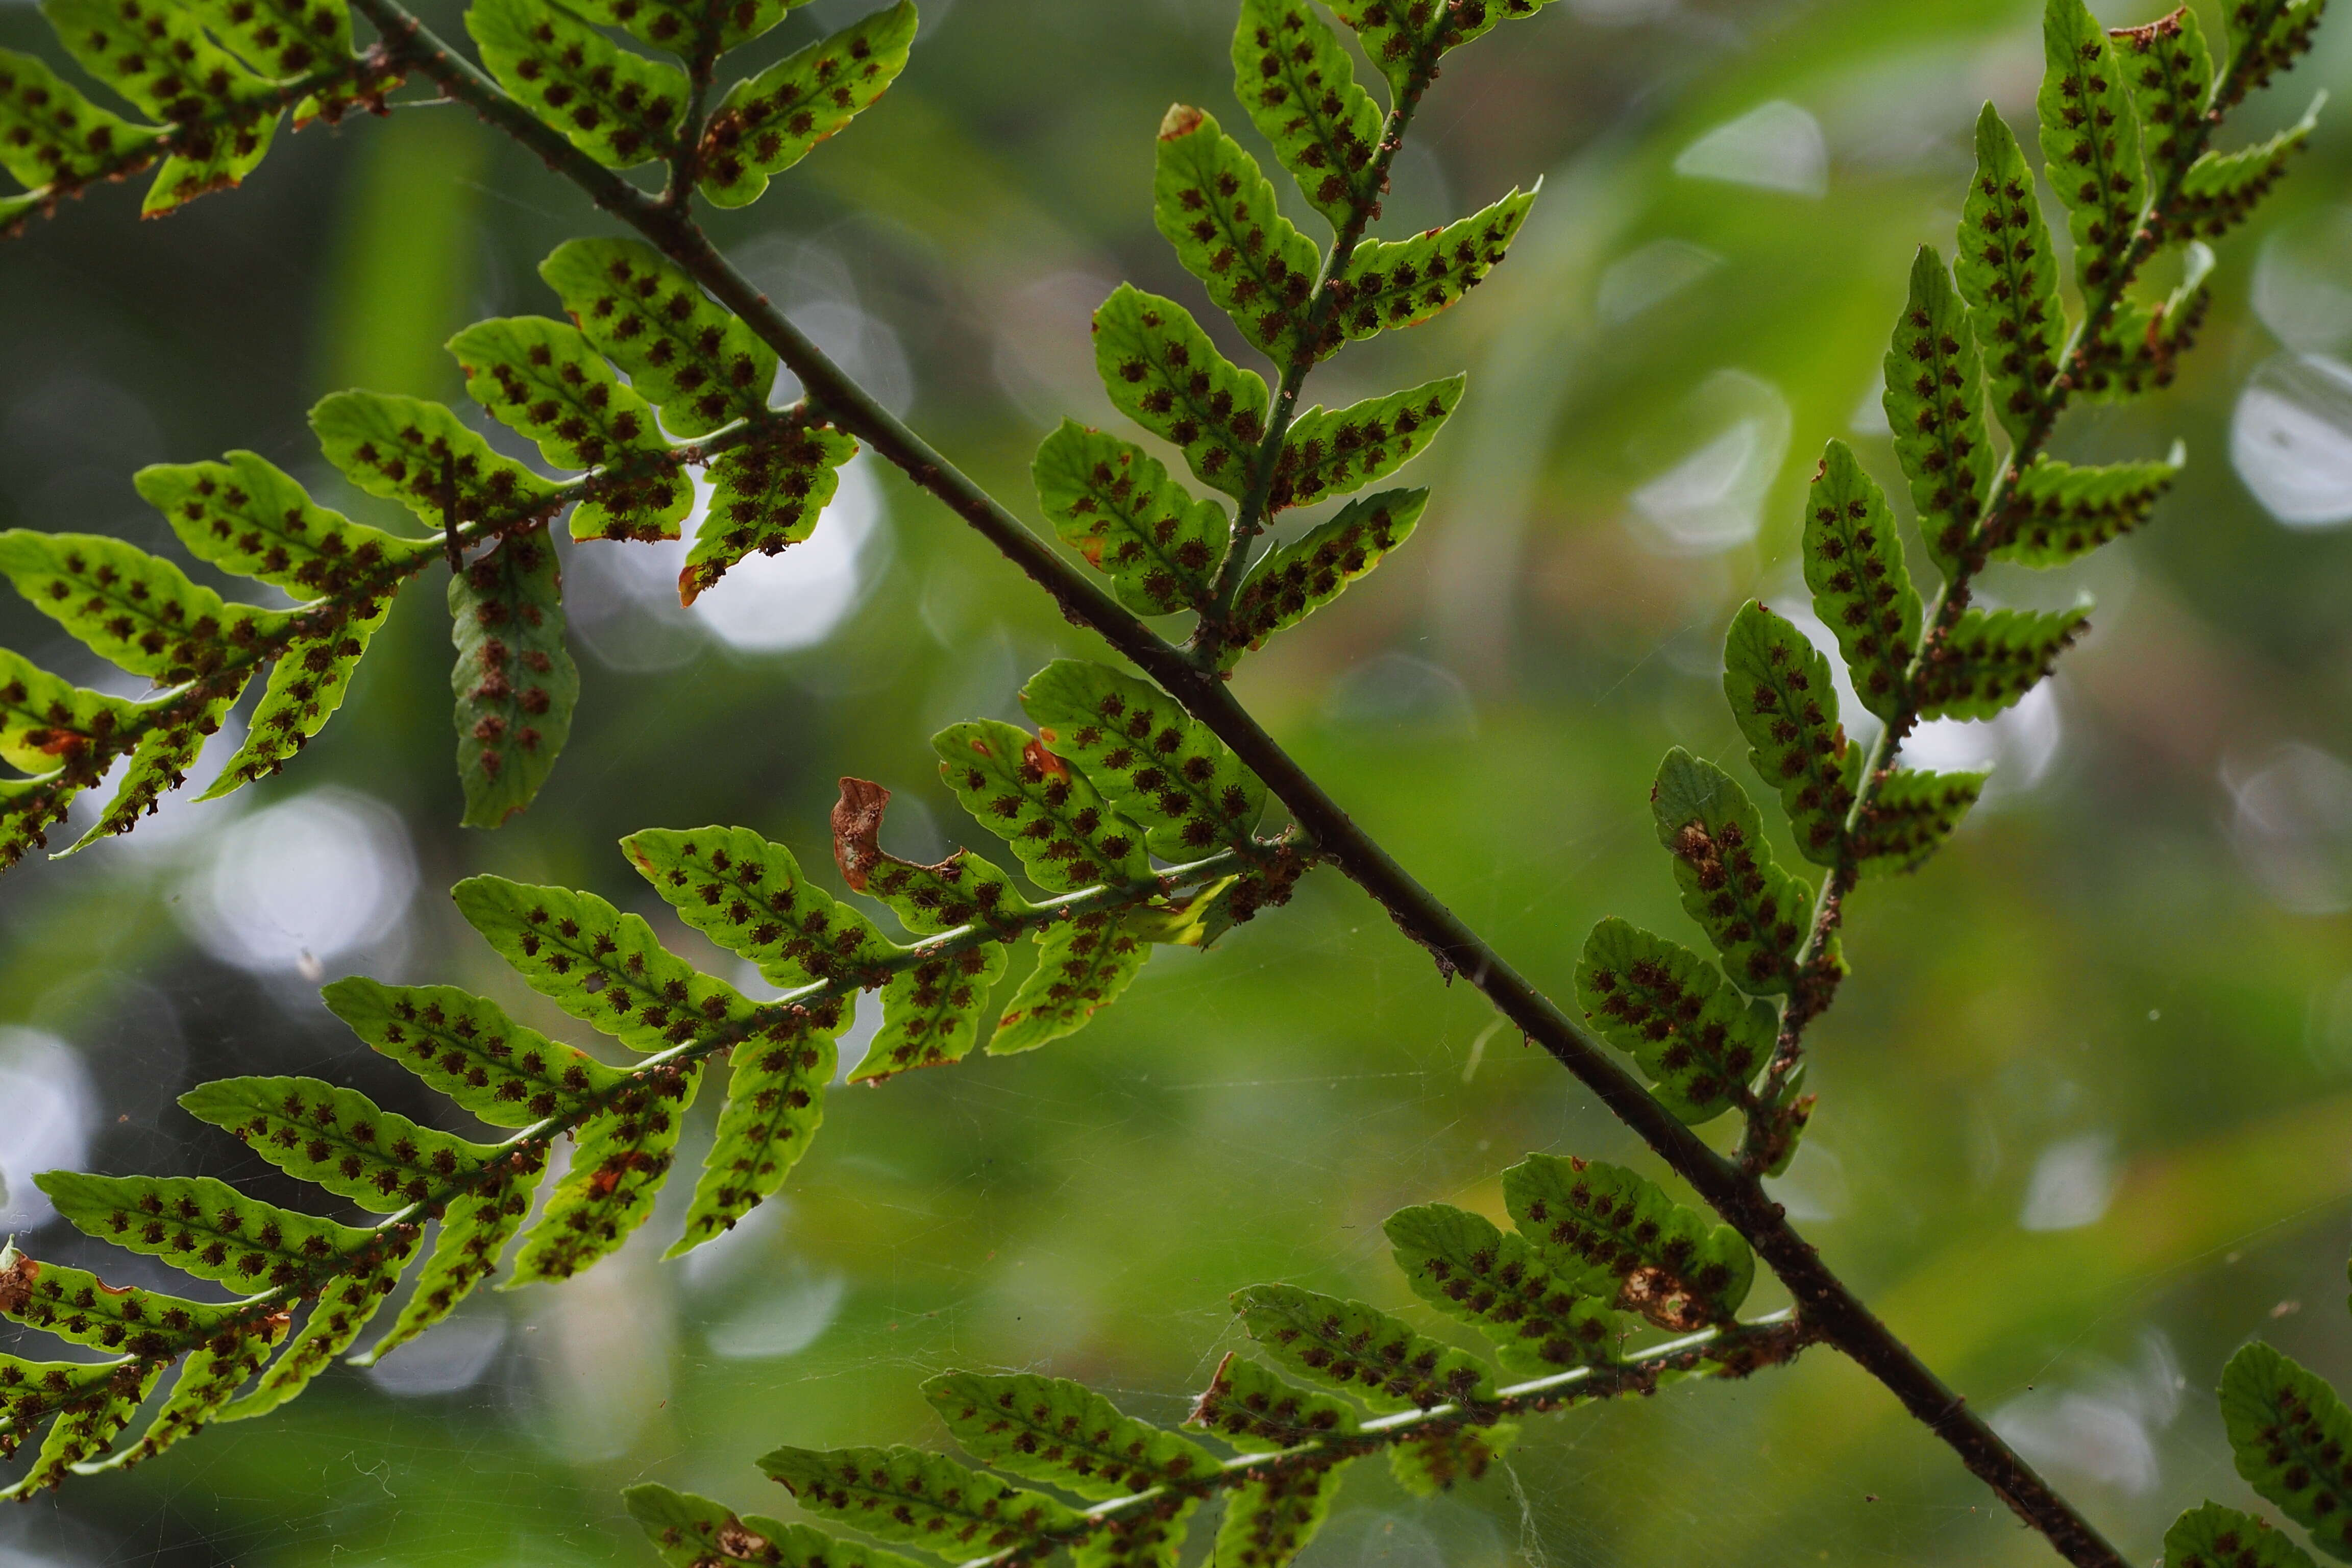 Image of Autumn fern